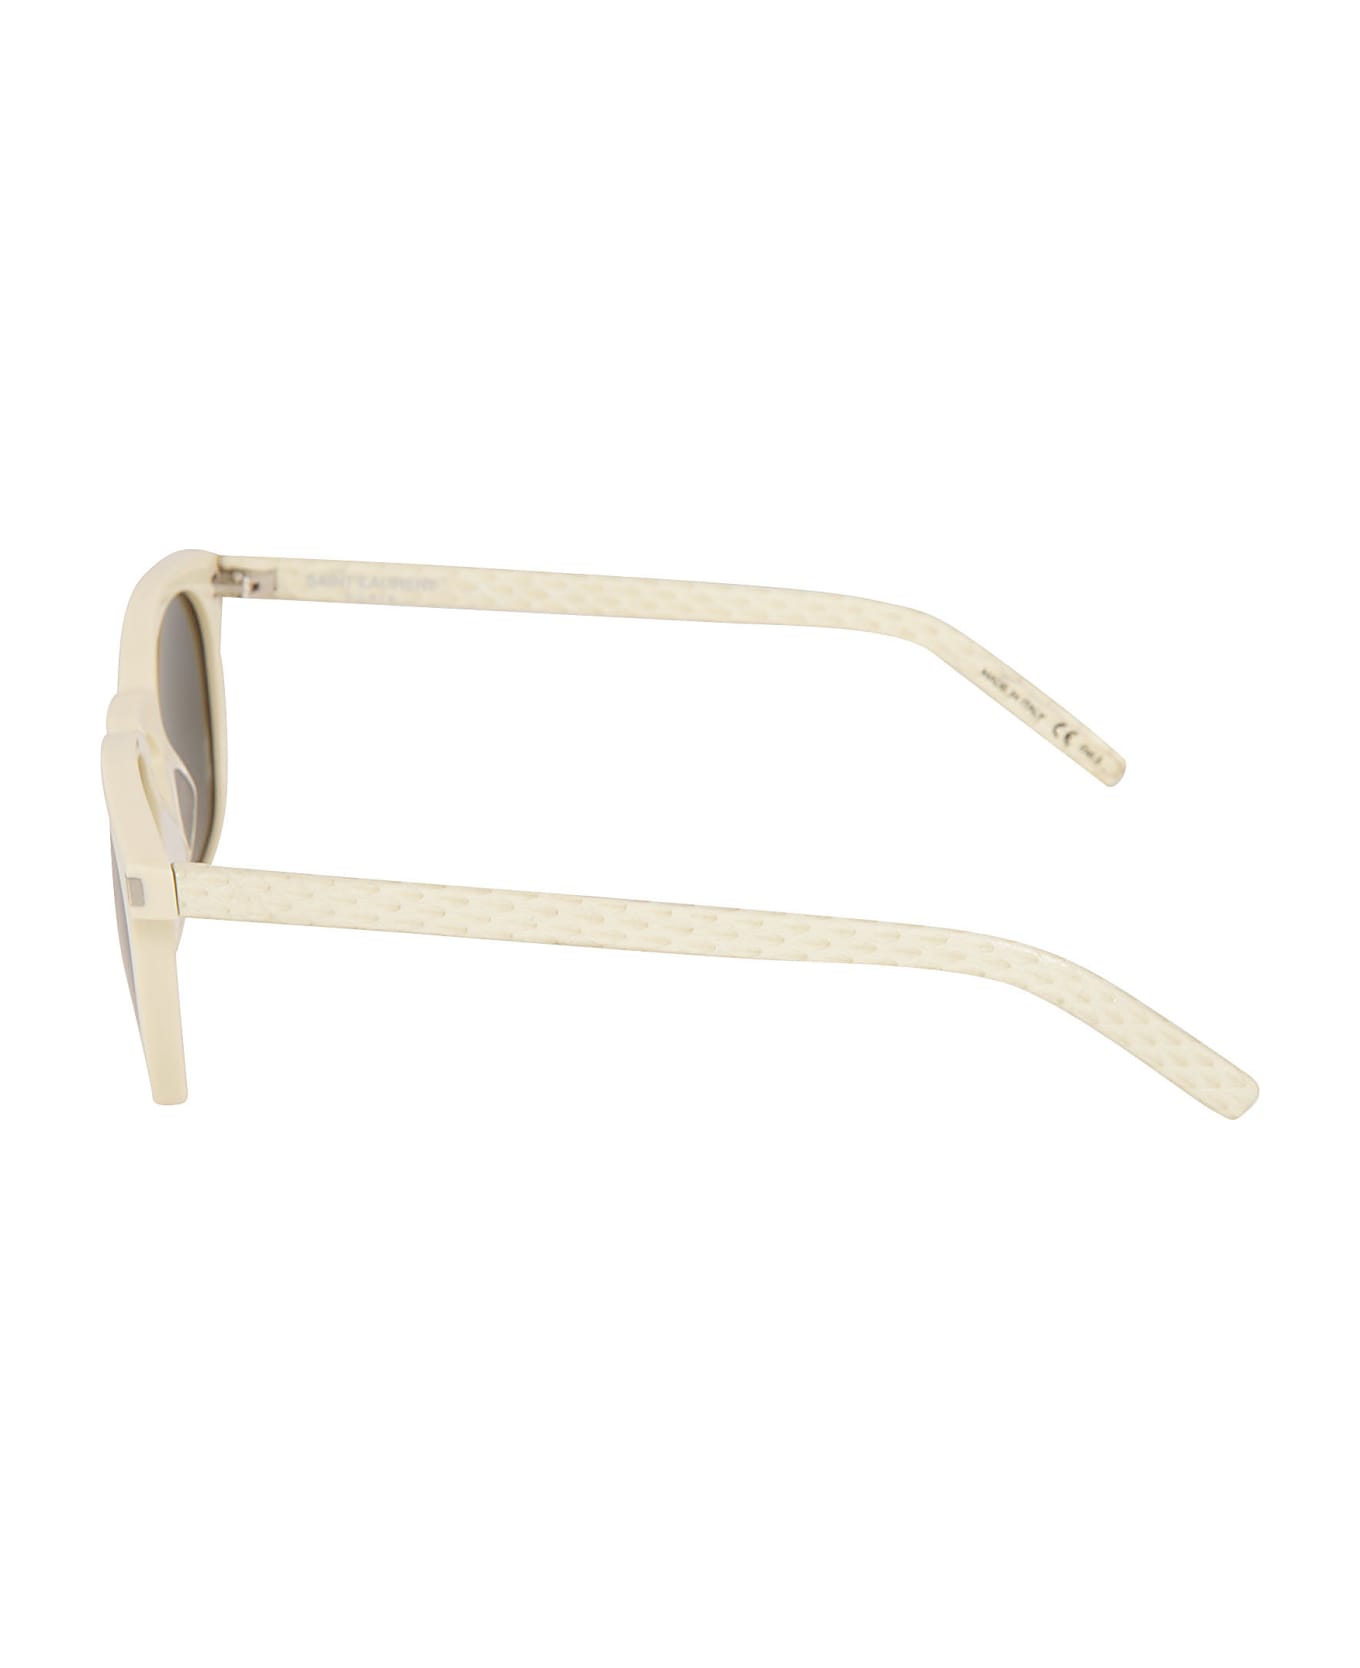 Saint Laurent Eyewear Sl-28 Sunglasses - Ivory/Grey